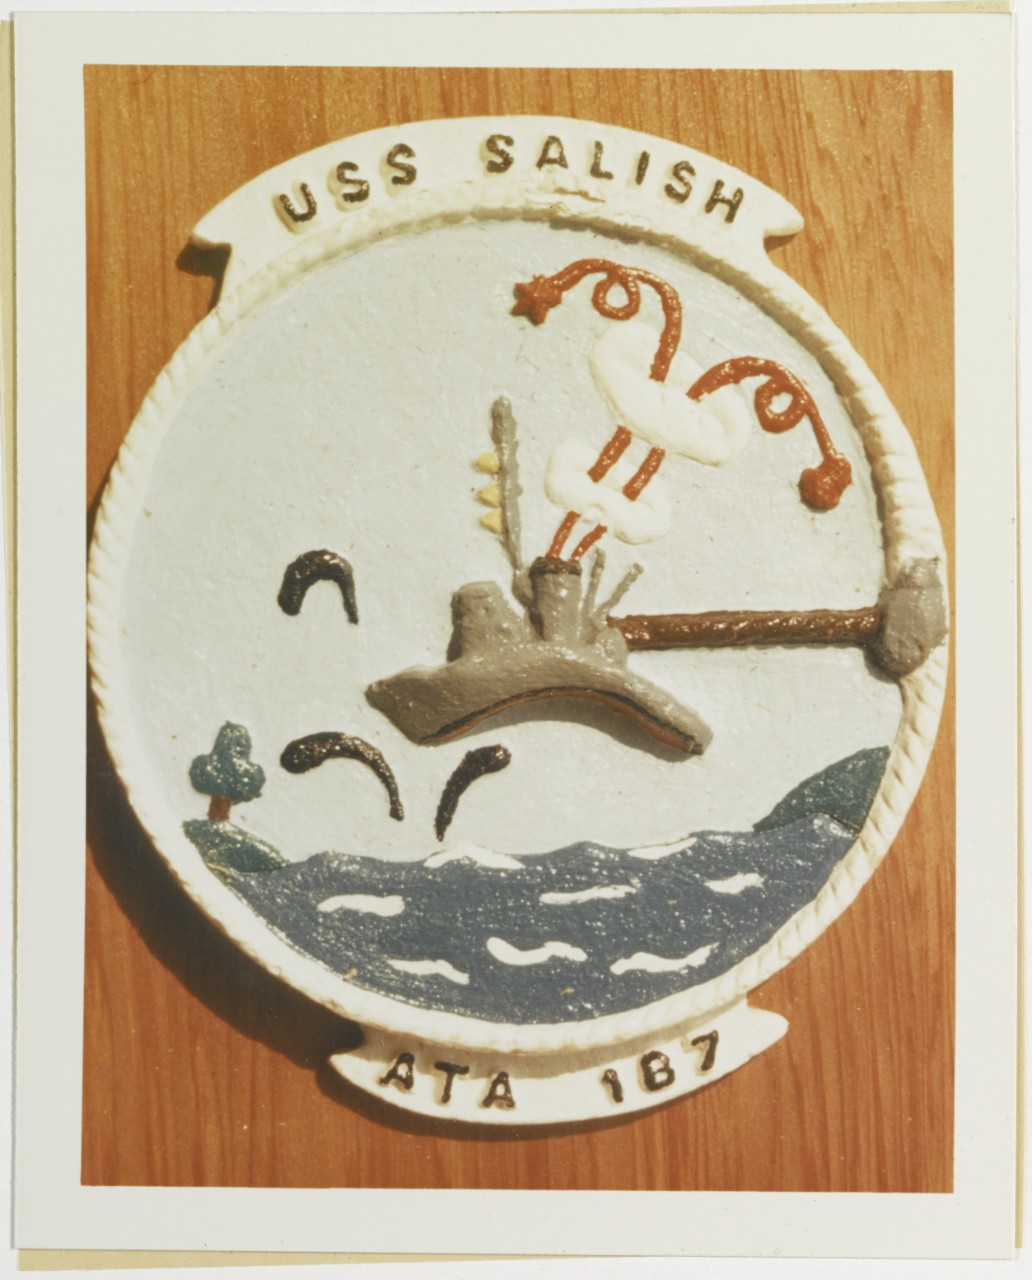 Insignia: USS SALISH (ATA-187)